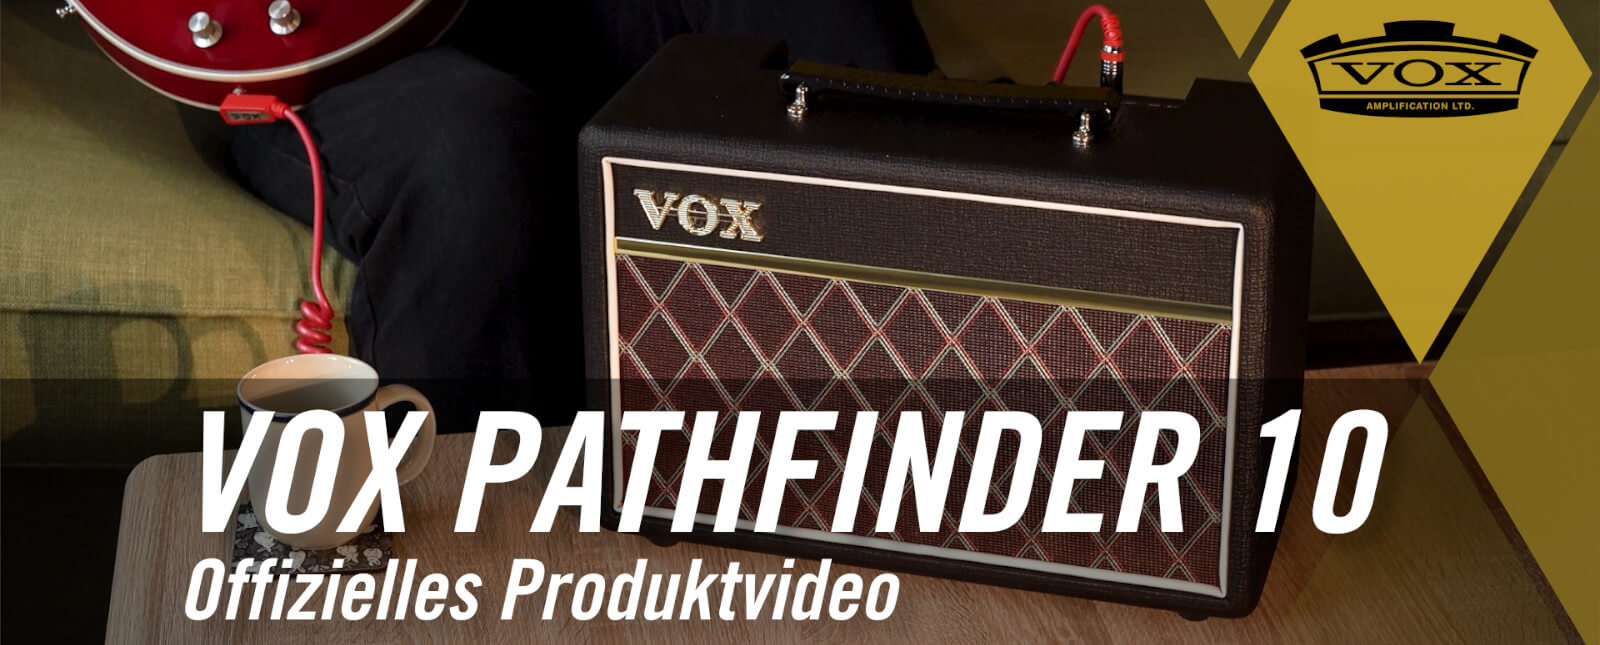 VOX Pathfinder 10 - Offizielles Produktvideo